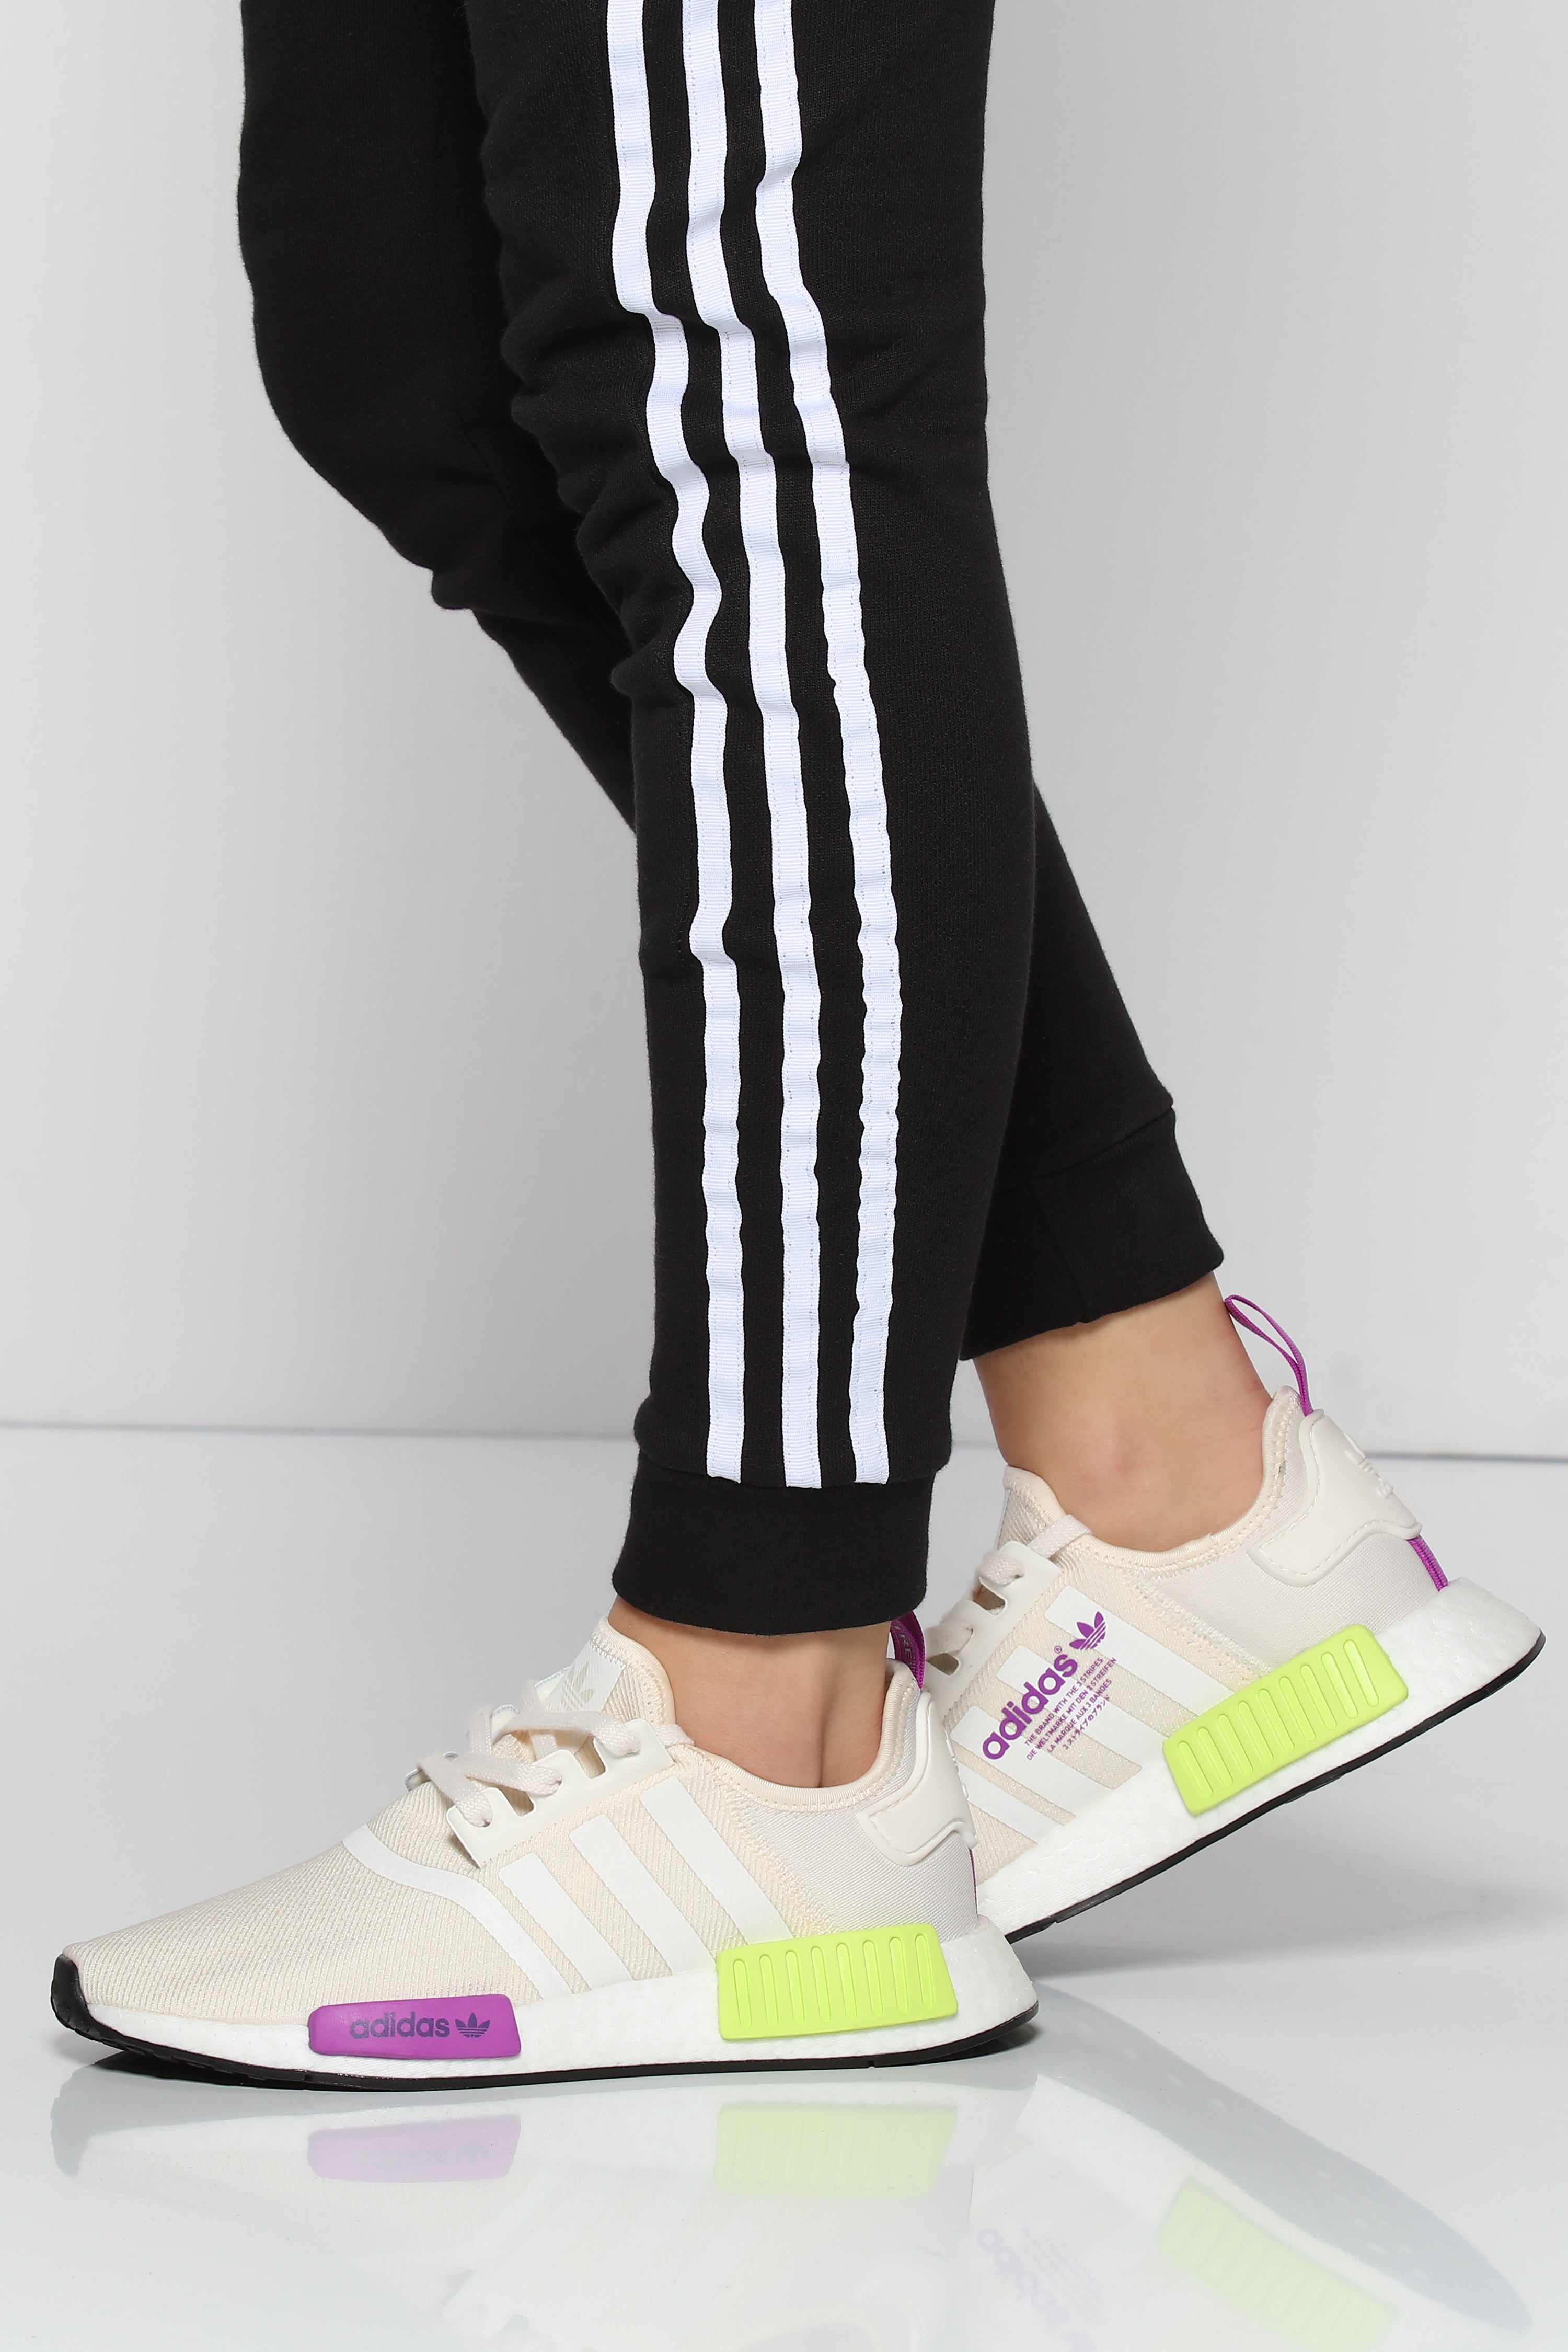 adidas nmd white and purple